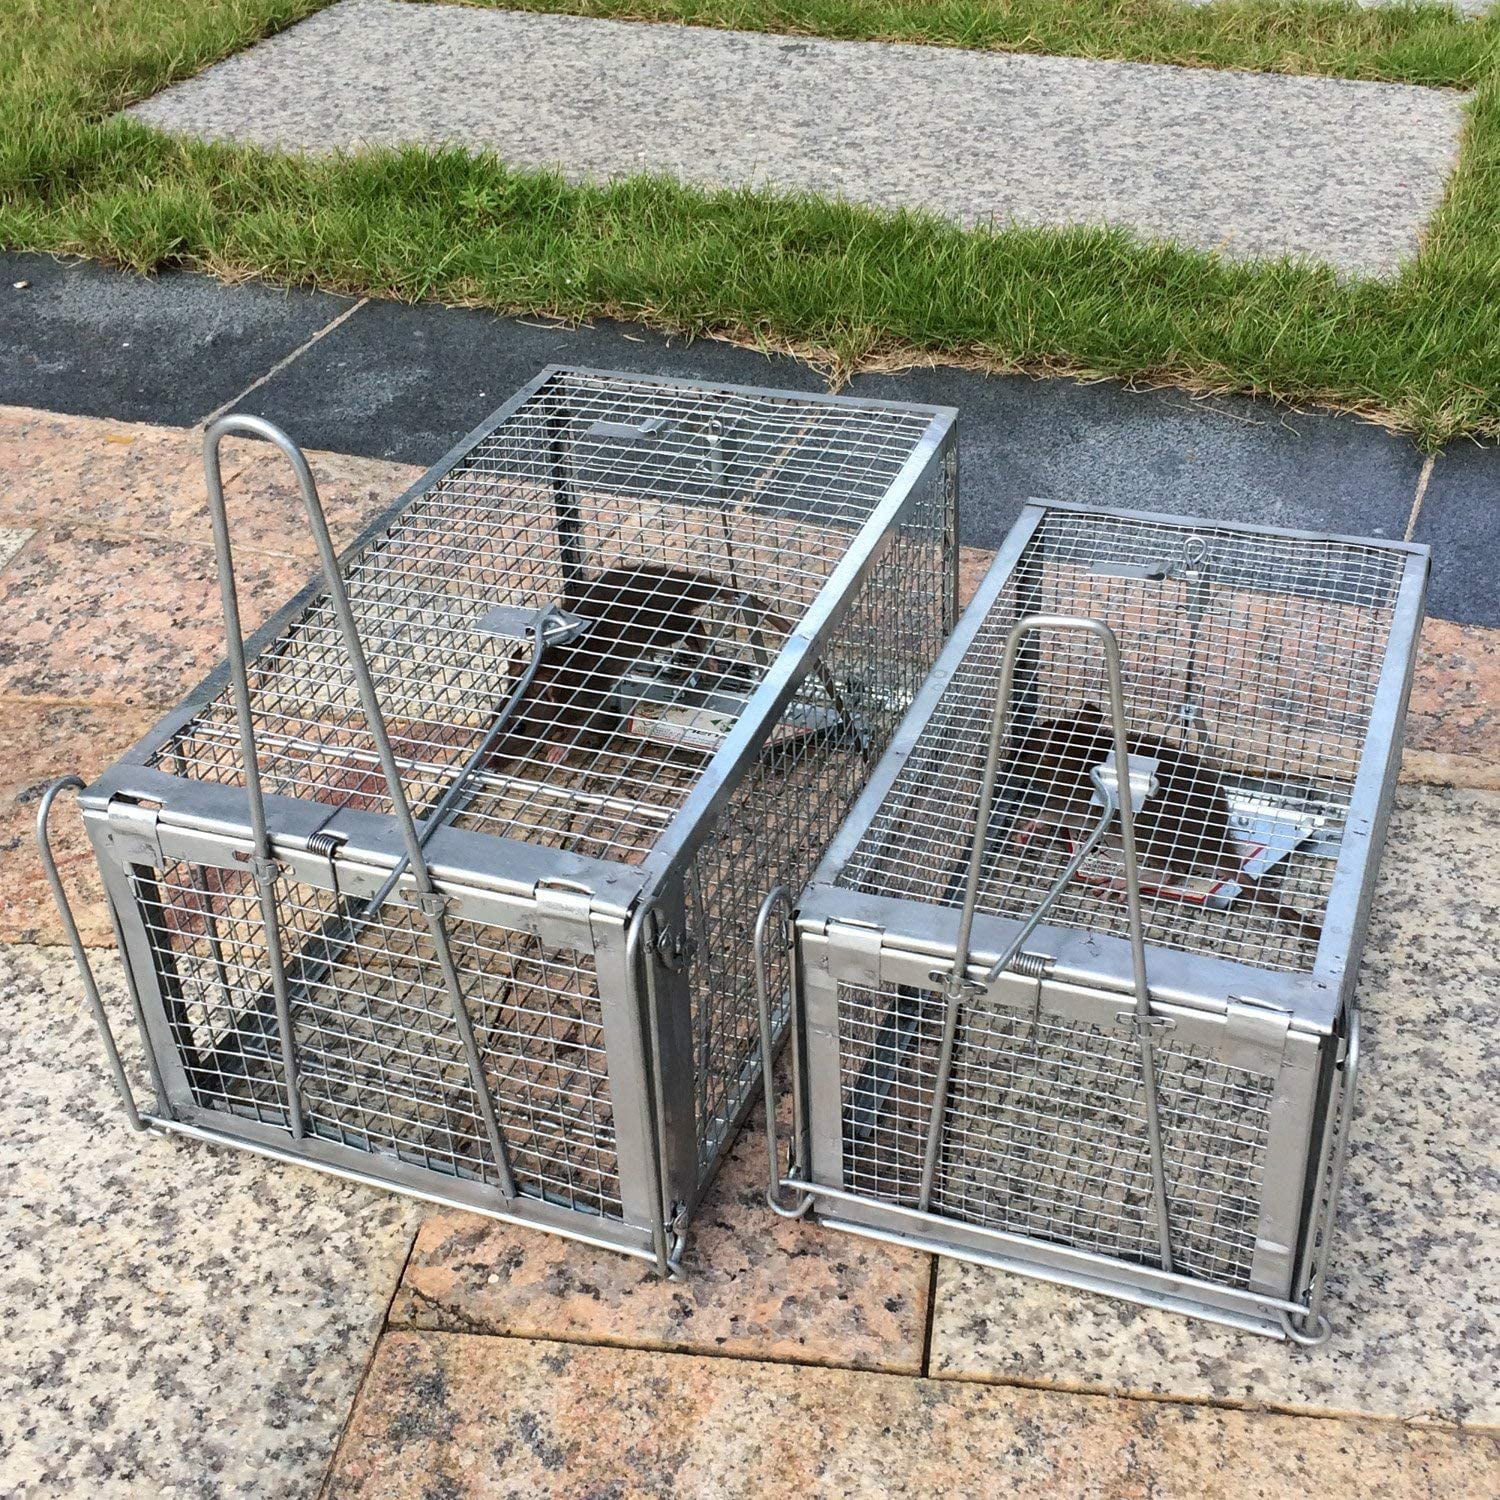 Humane Rat Trap Chipmunk Rodent Trap That Work For Indoor - Temu